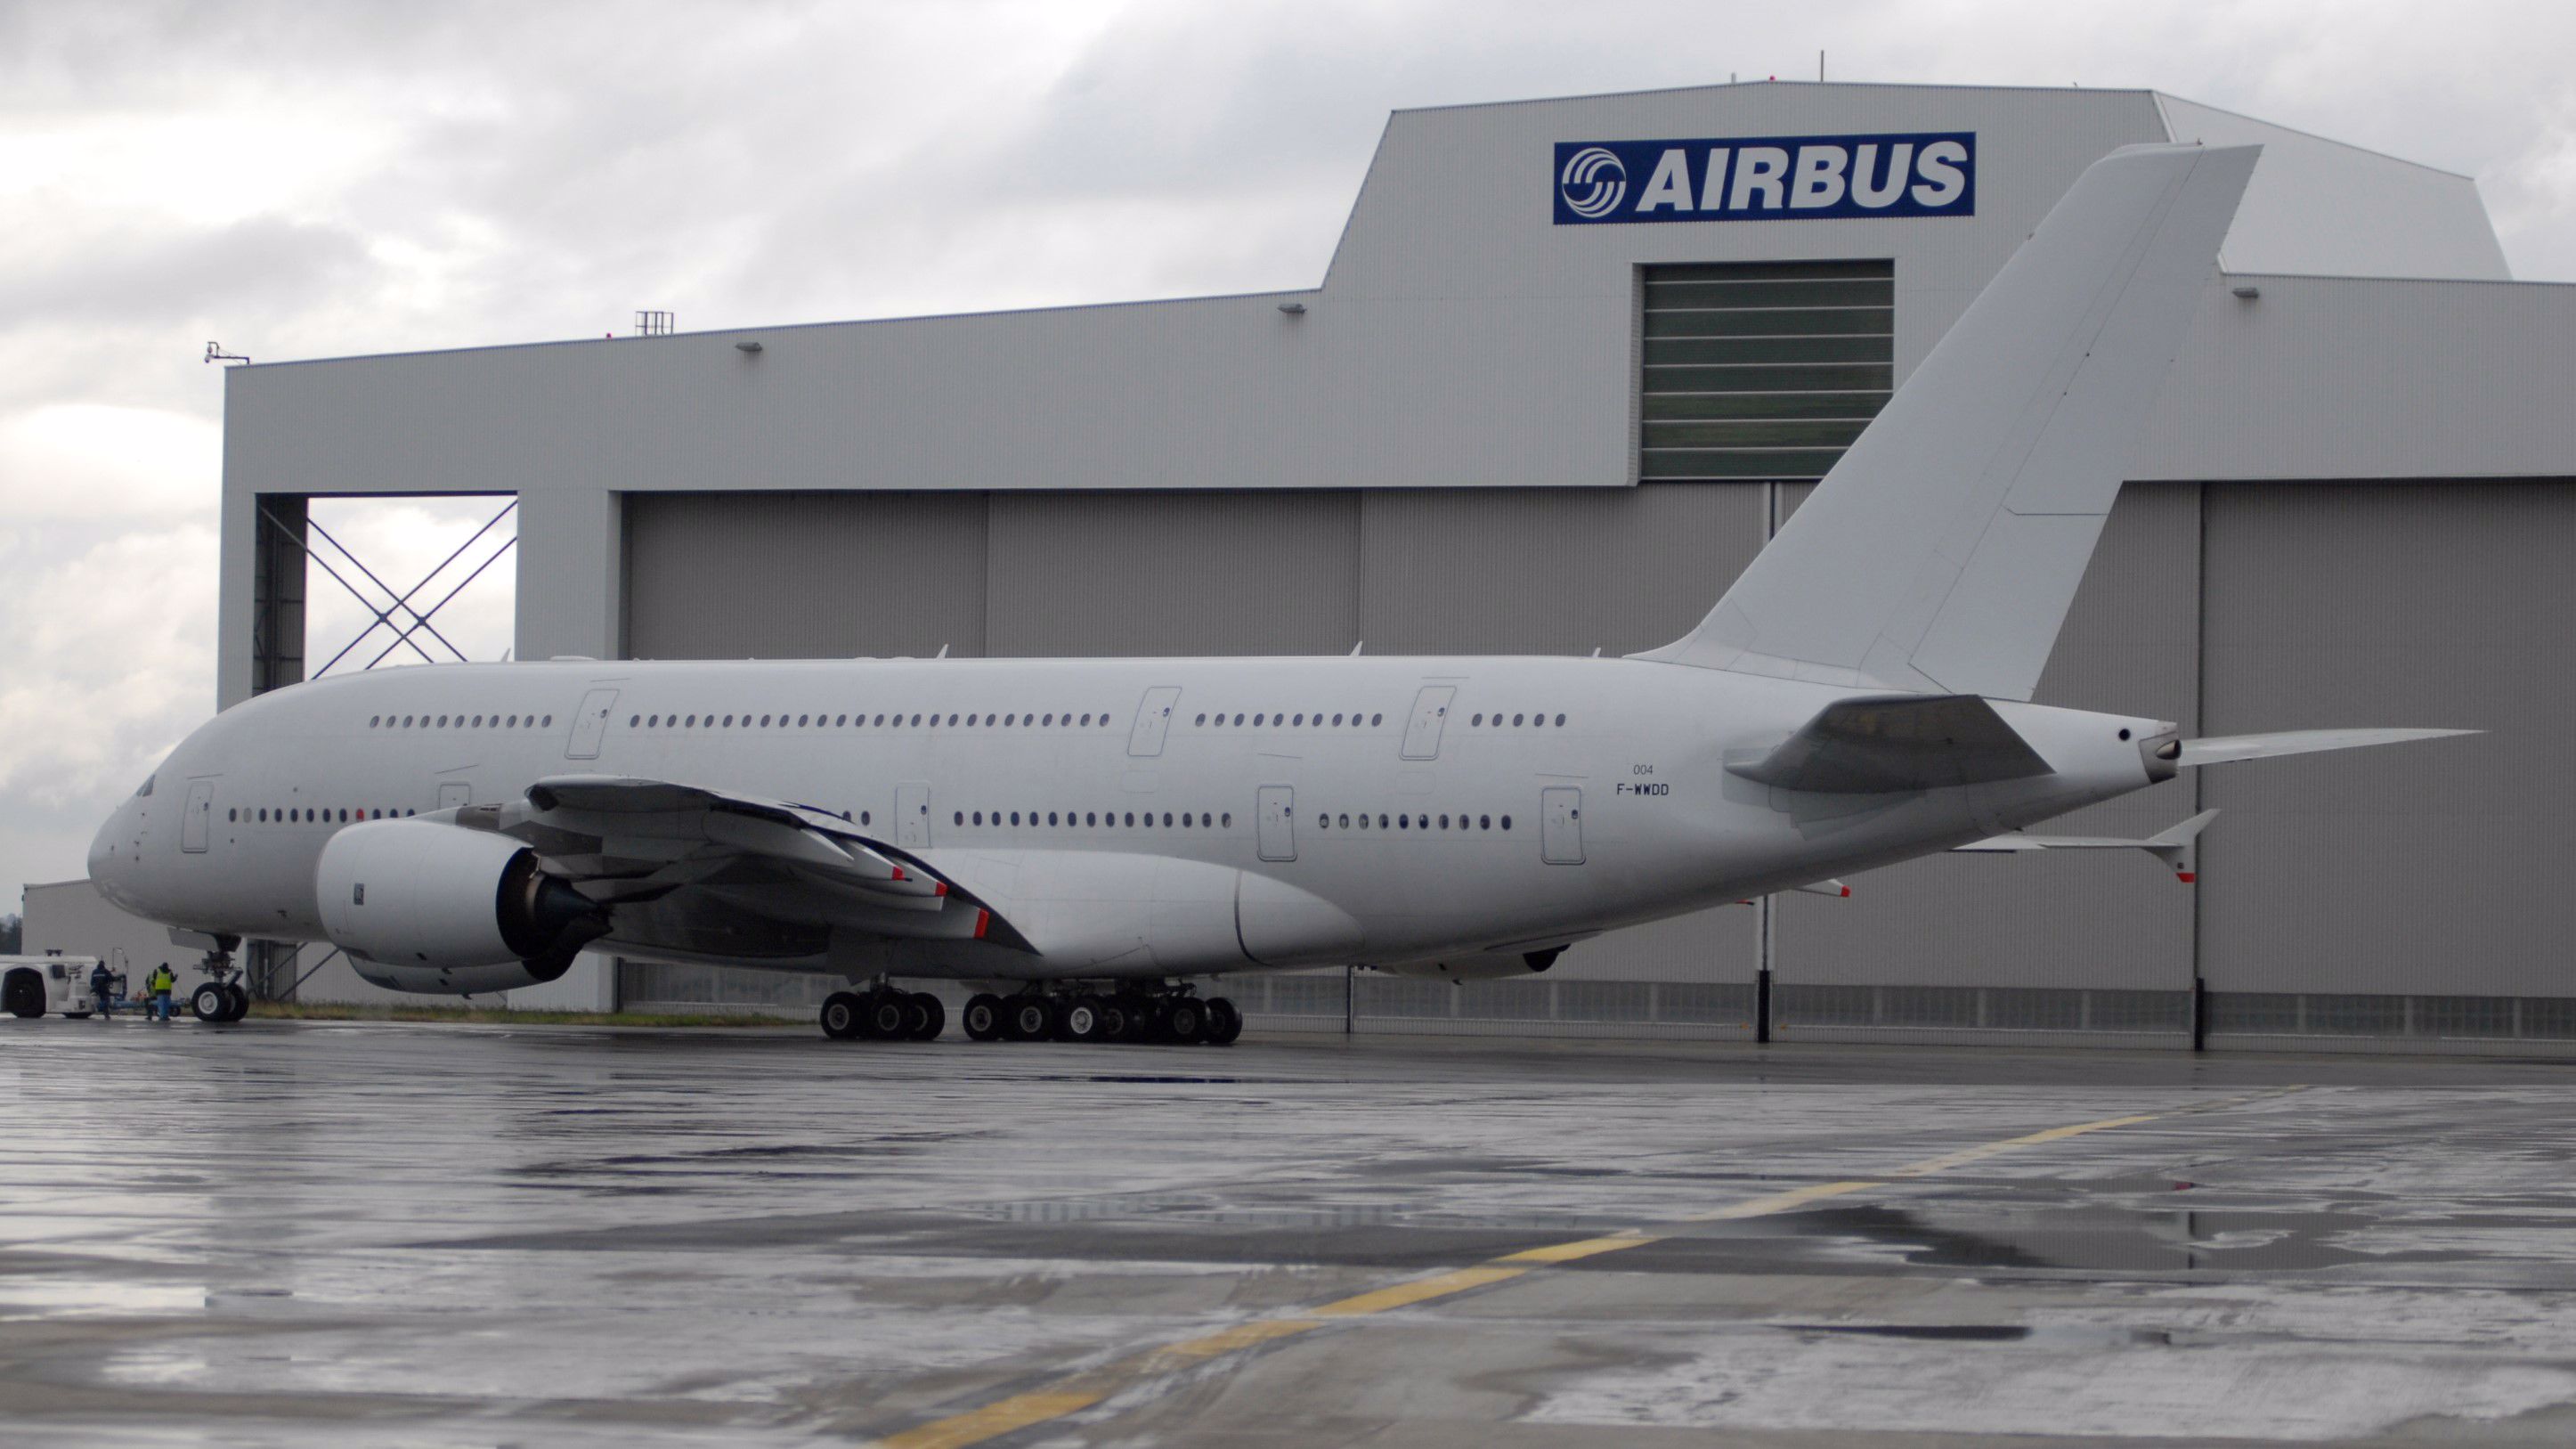 Airbus announce 15,000 job cuts